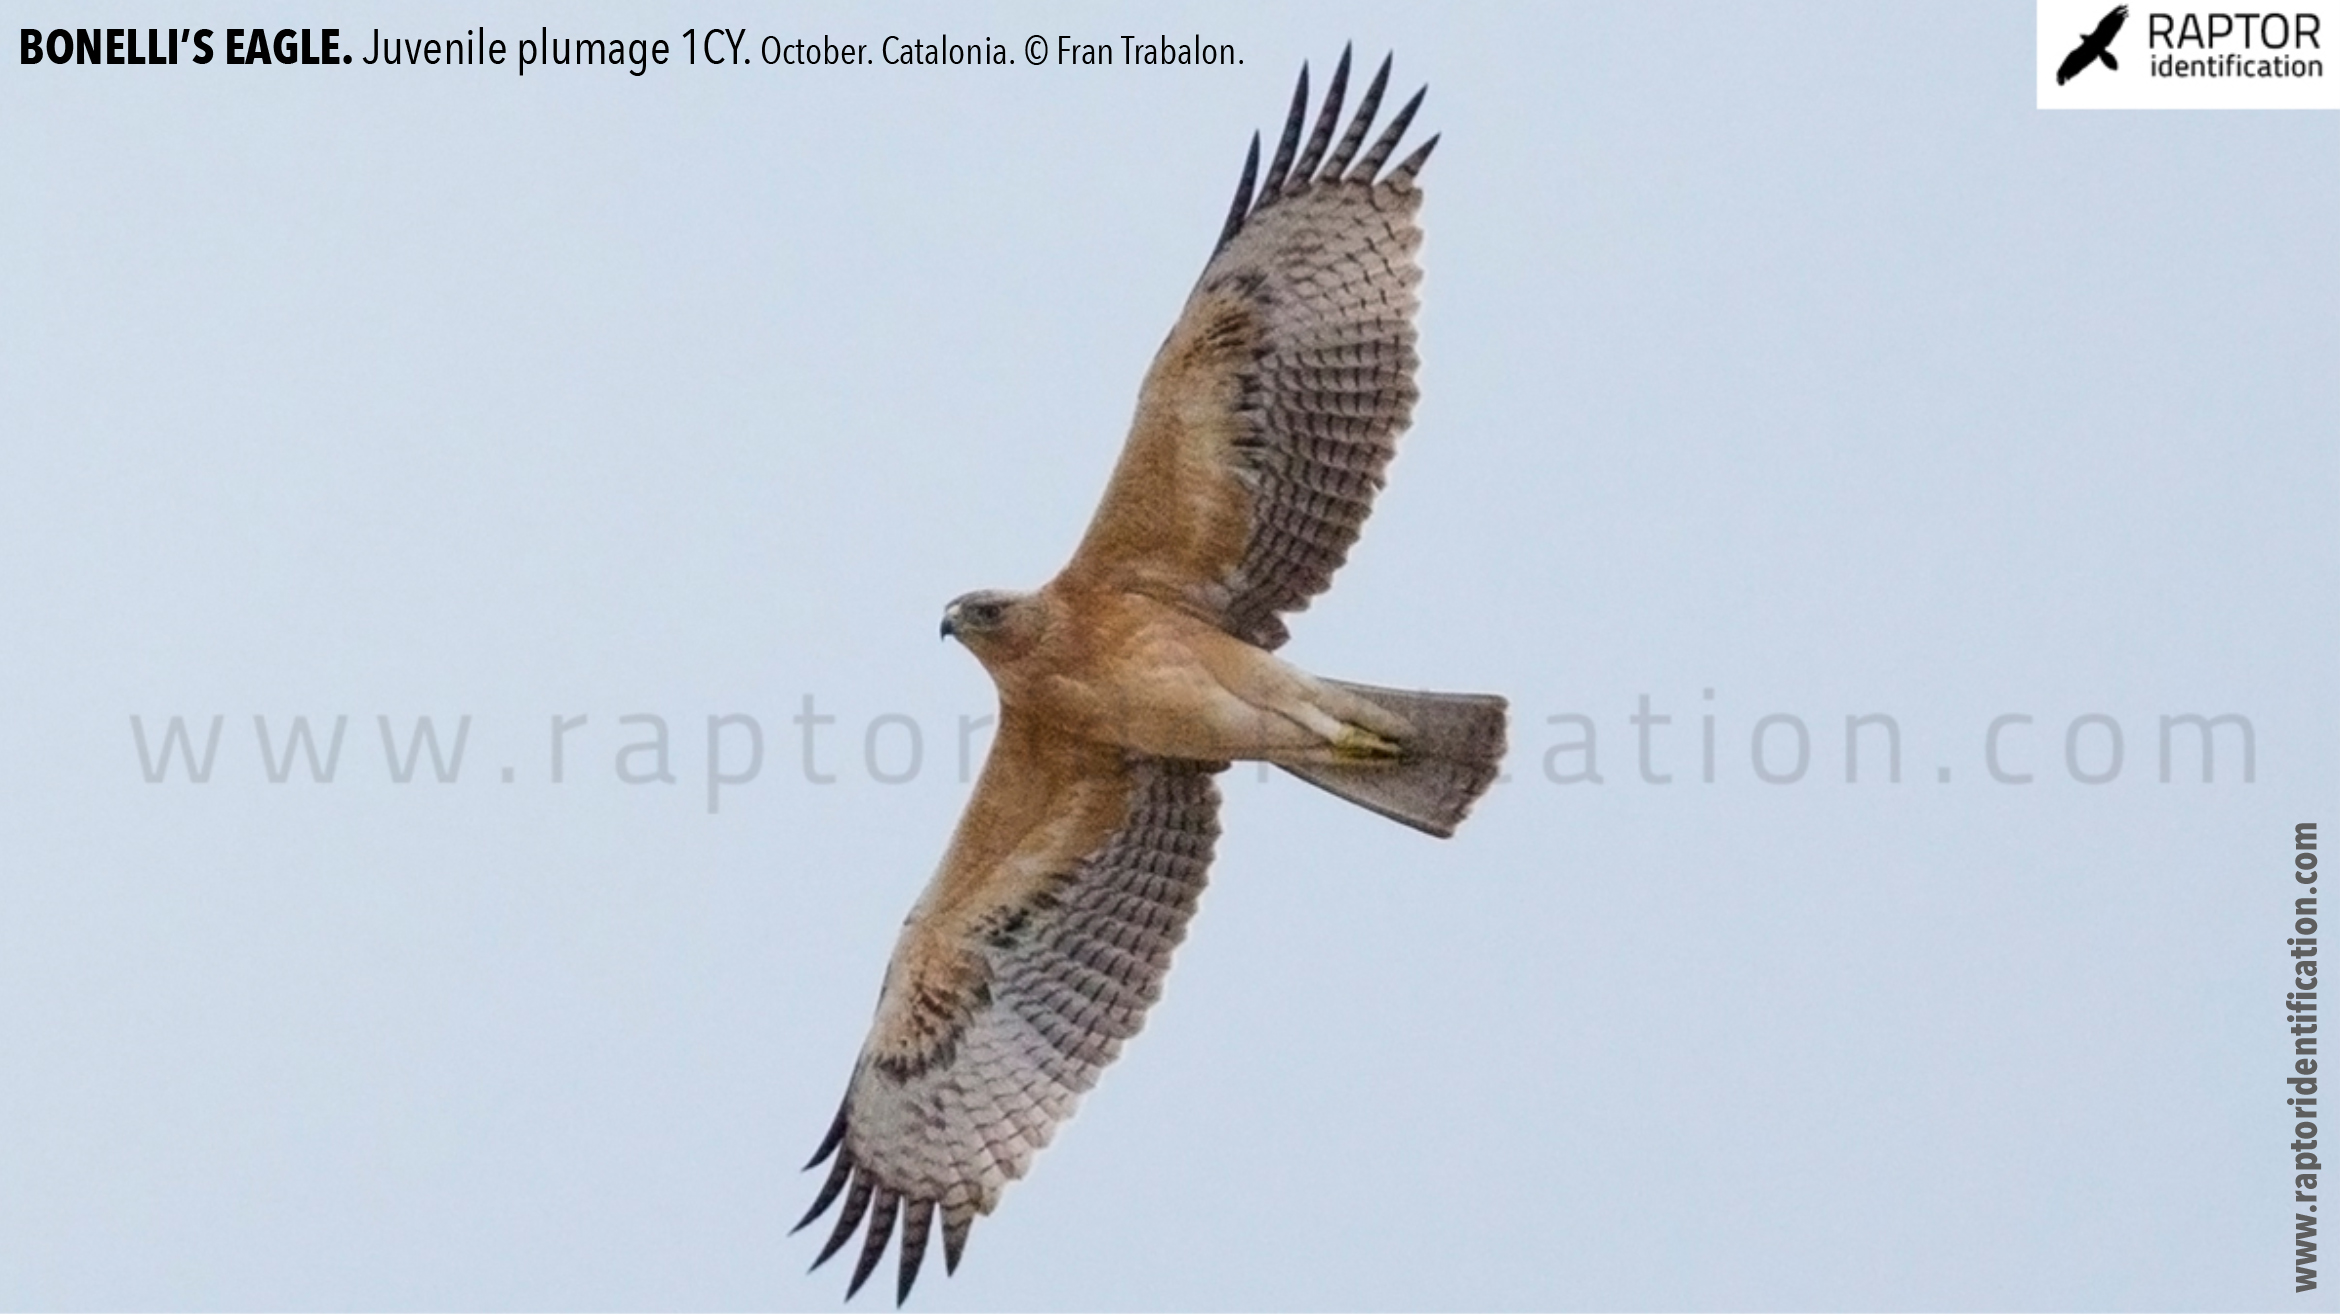 Bonellis-Eagle-juvenile-plumage-identification